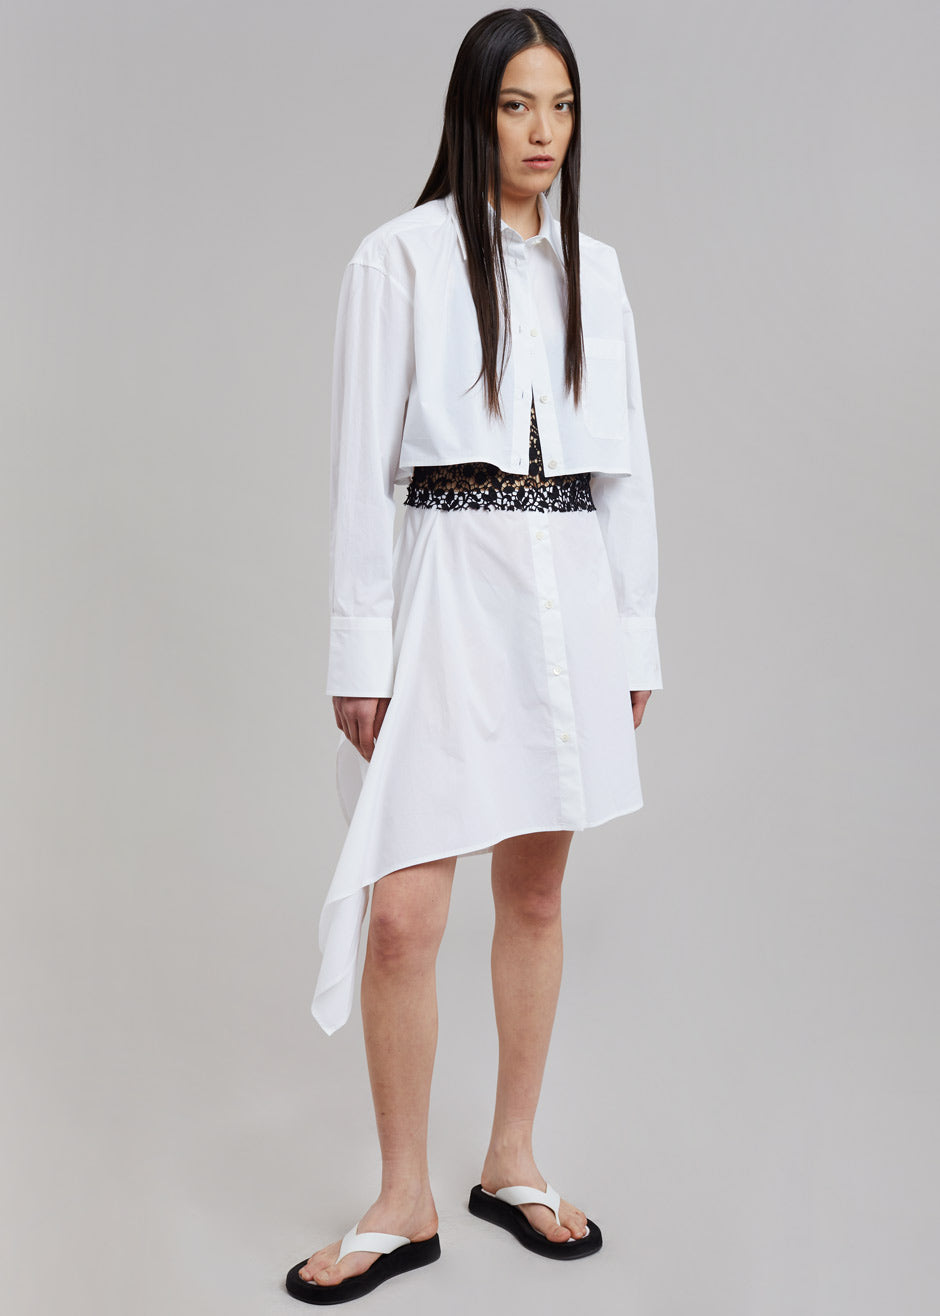 JW Anderson Lace Insert Shirt Dress - White/Black - 1